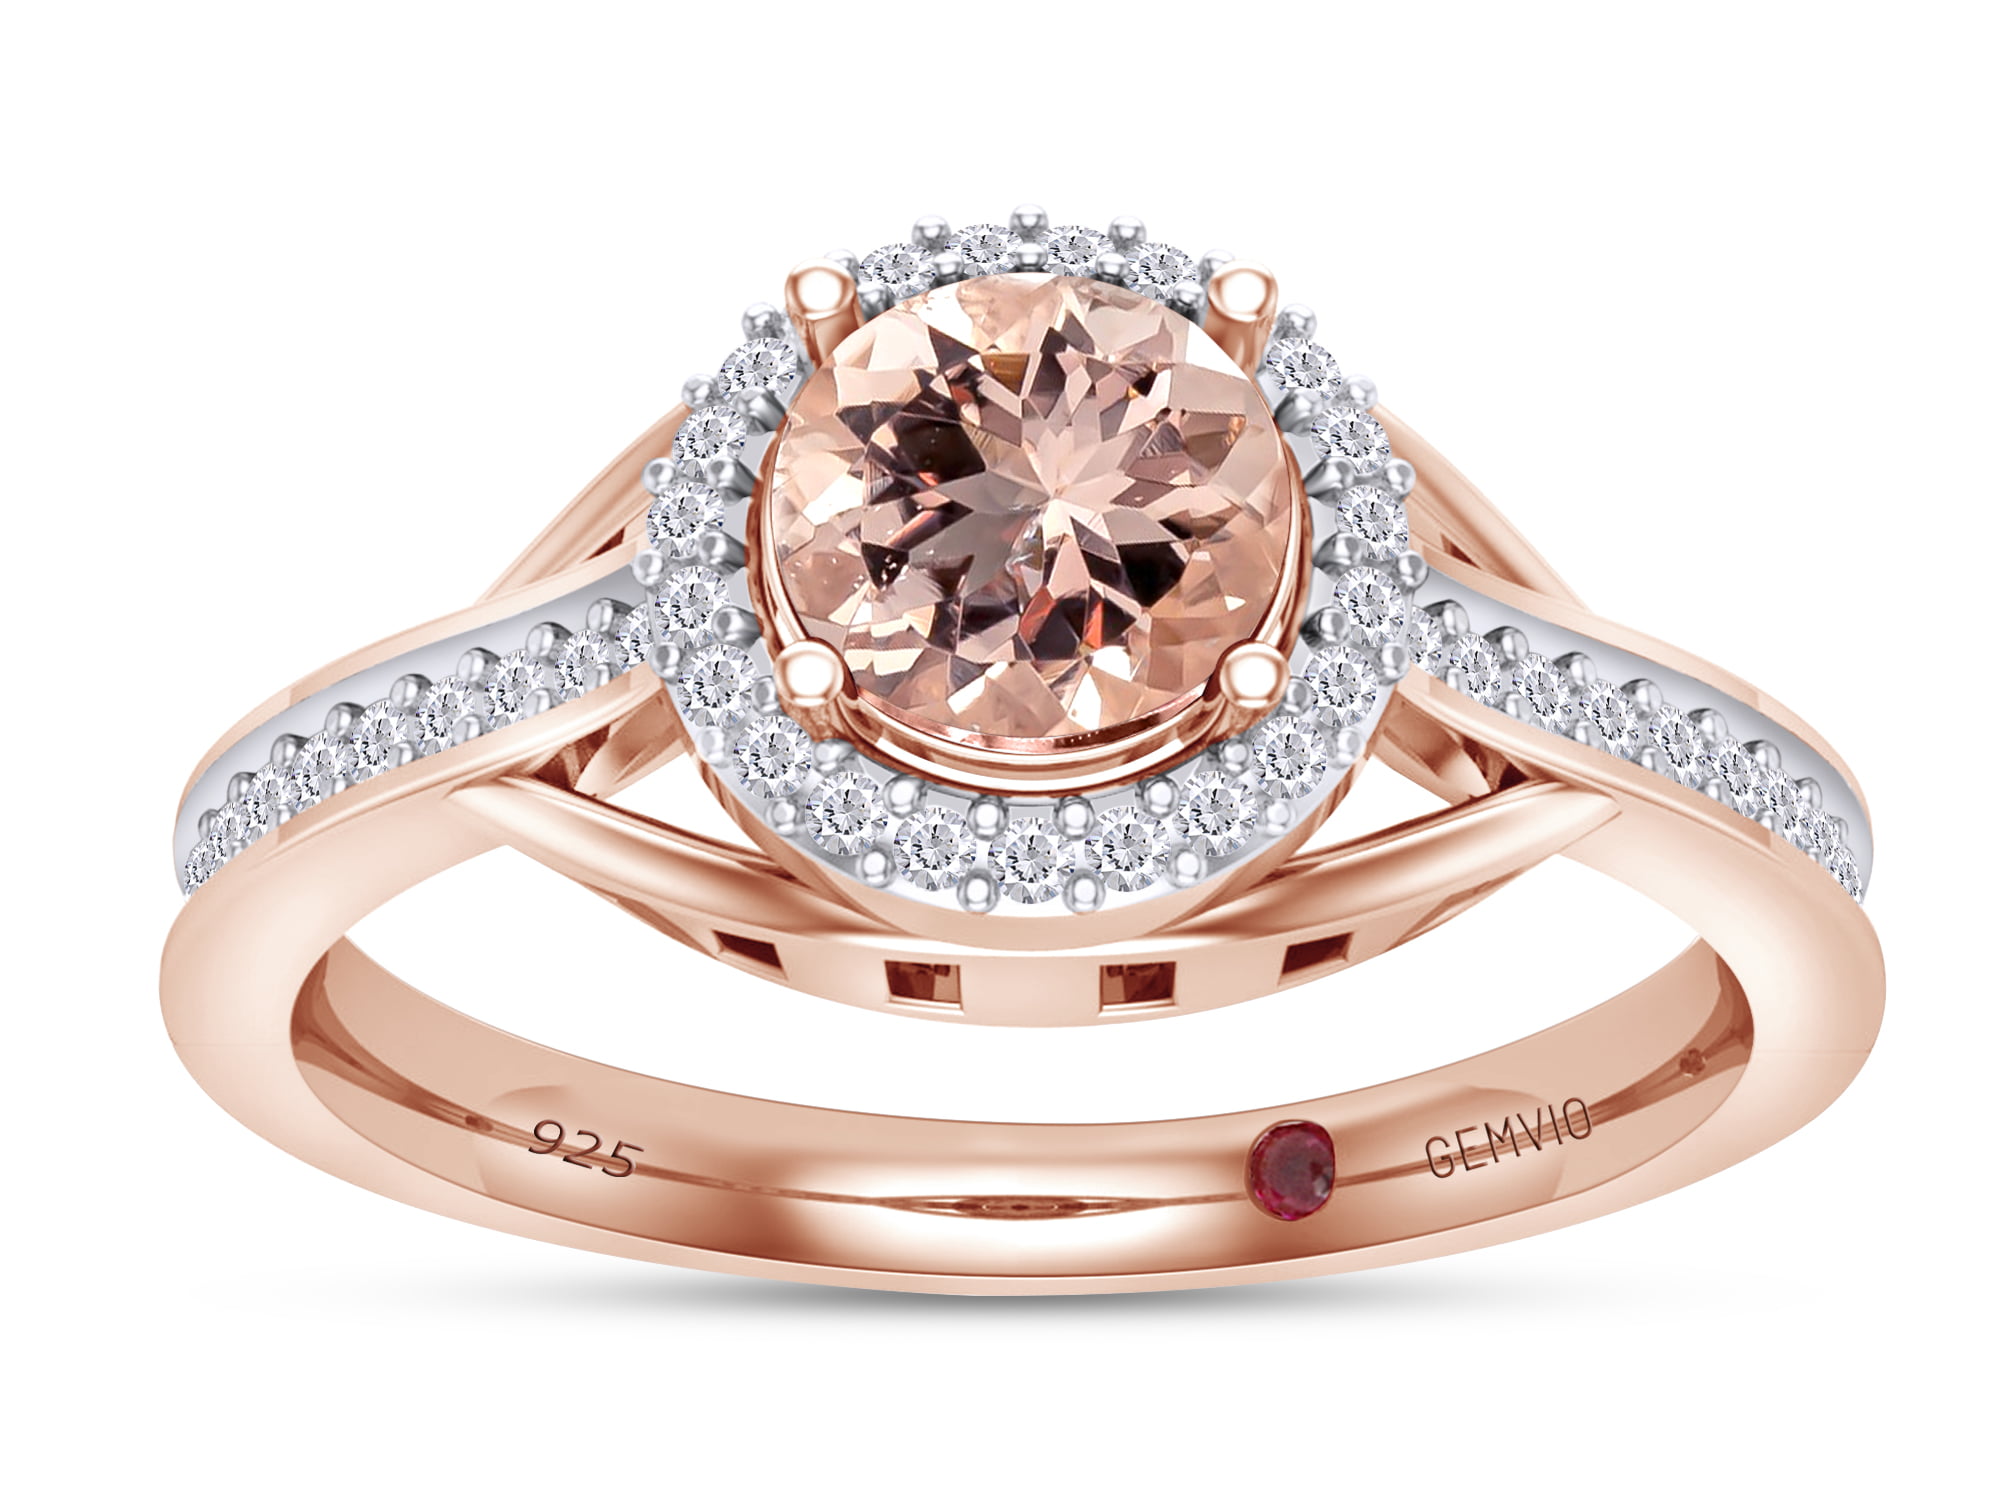 Details about   Morganite Gemstone Engagement Ring 925 Sterling Silver Rose Color 